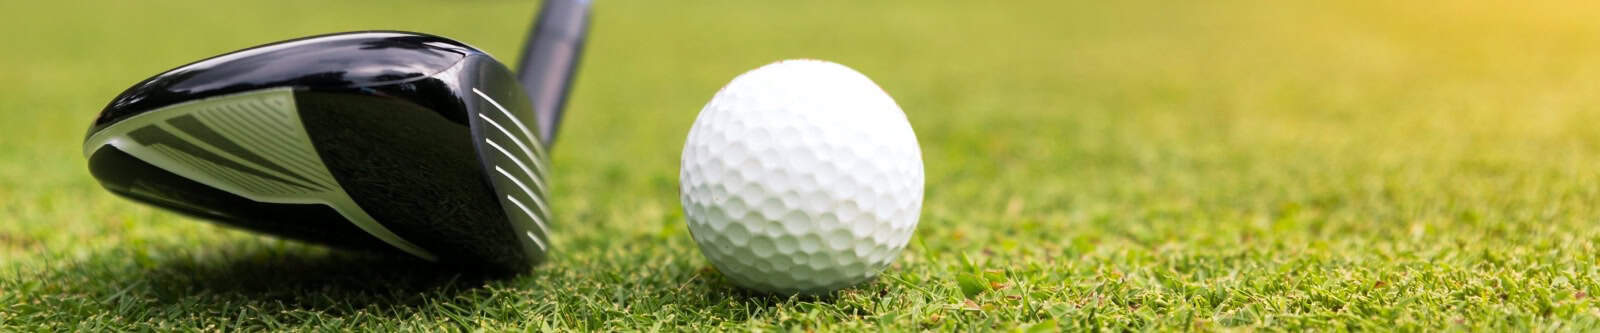 Golf ball and golf club